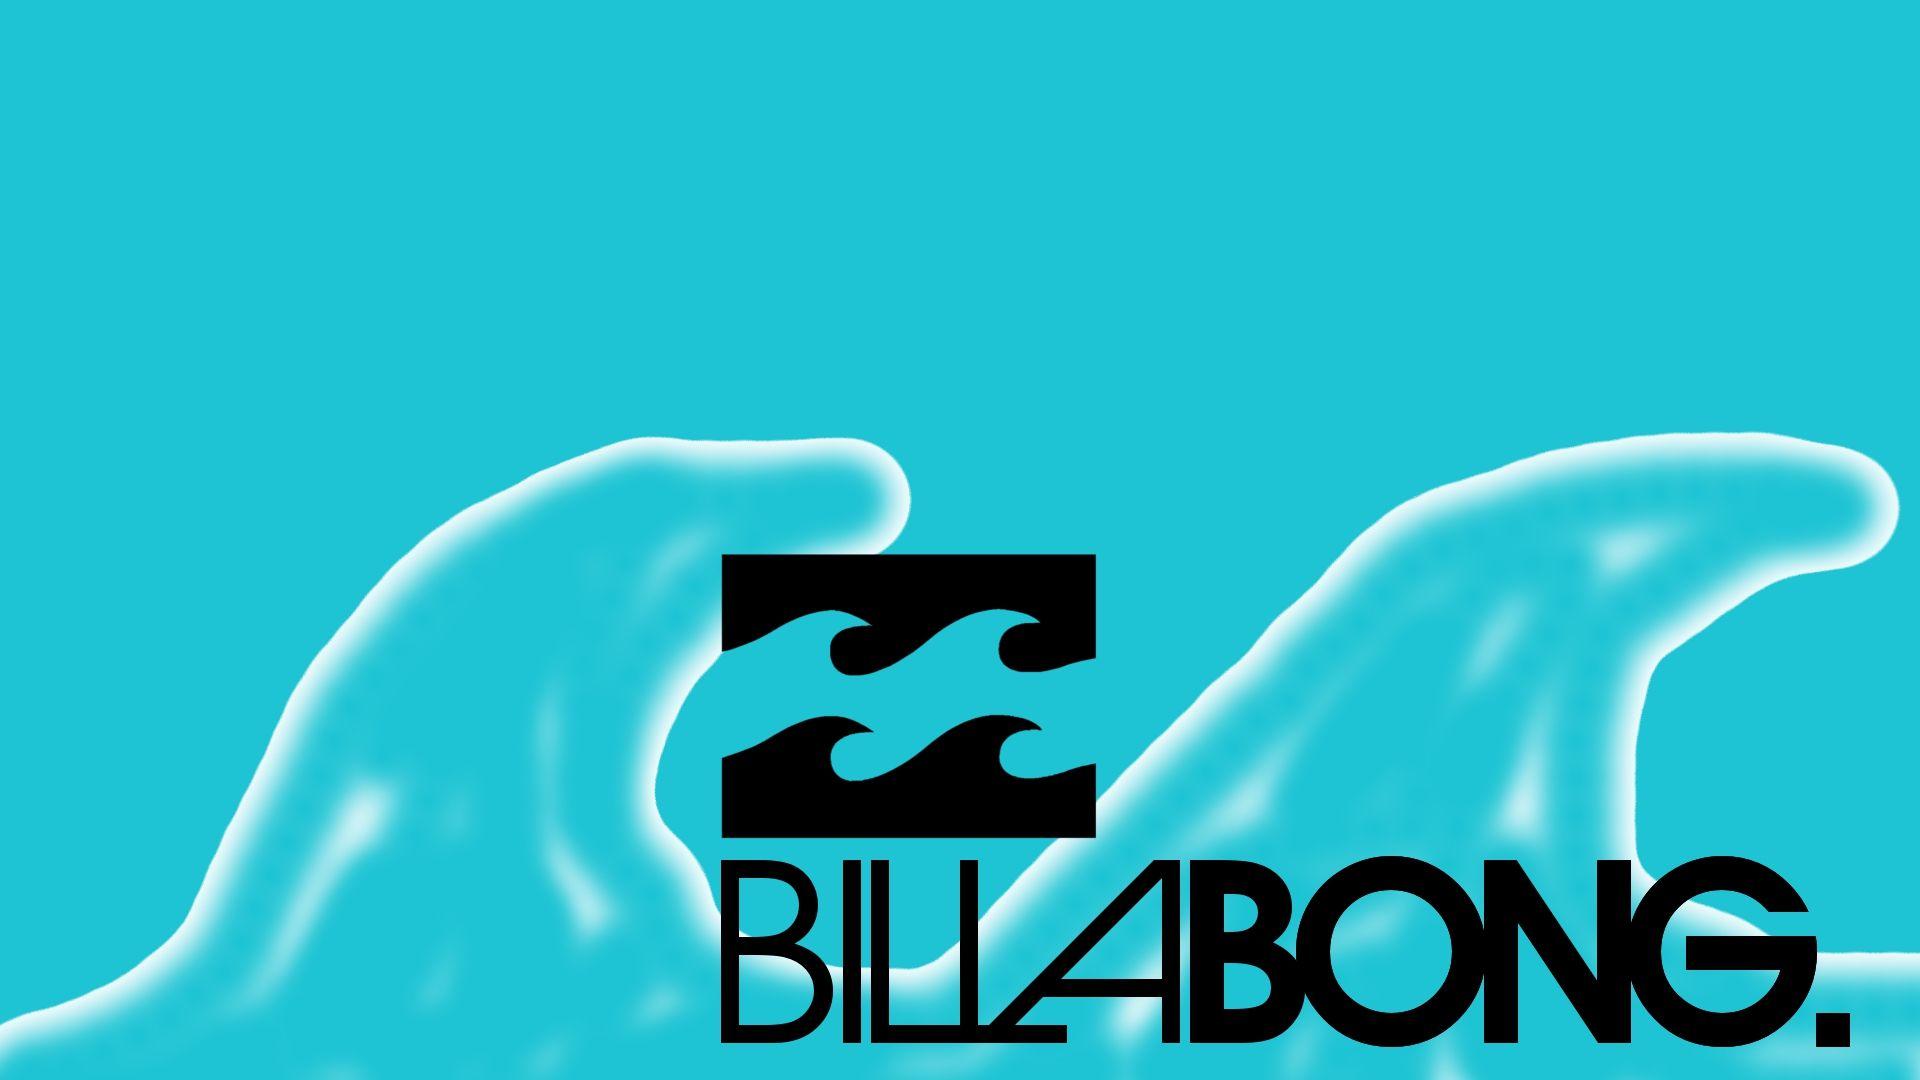 Billabong Wave Logo - Billabong Logo On Blue Waves Background 1920x1080 HD Surfing